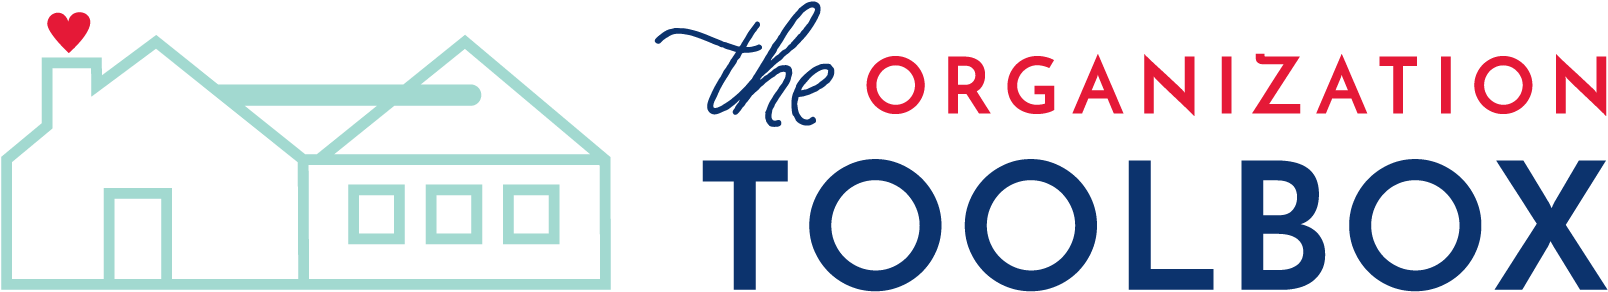 The Organization Toolbox - Organization (1761x425), Png Download